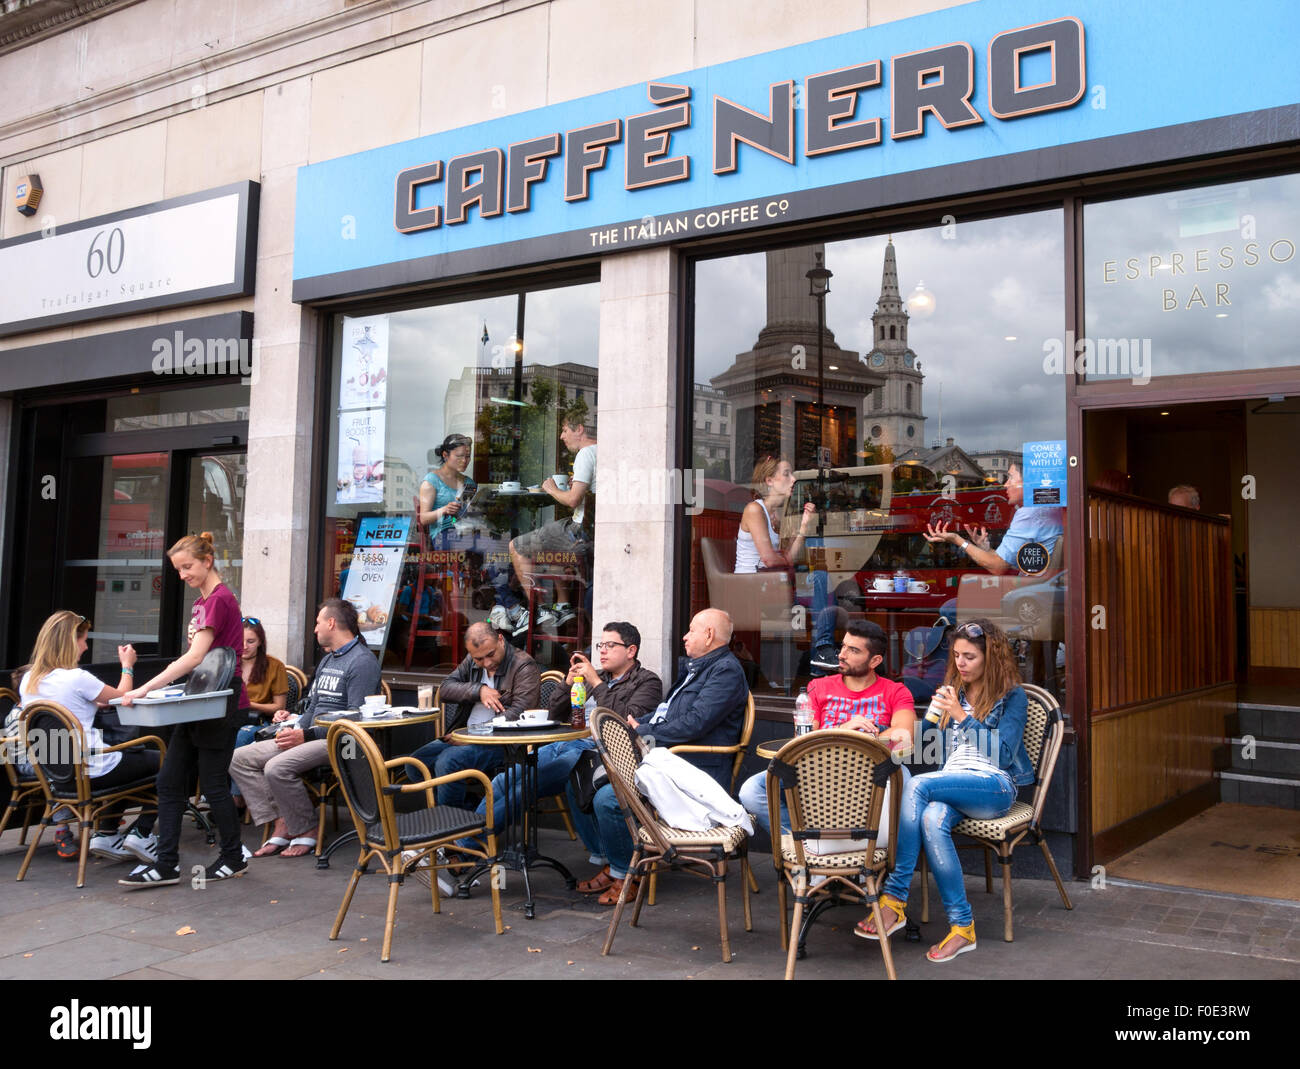 Coffee shop exterior UK; People sitting outside the Caffe Nero coffee shop, Trafalgar Square, London UK Stock Photo